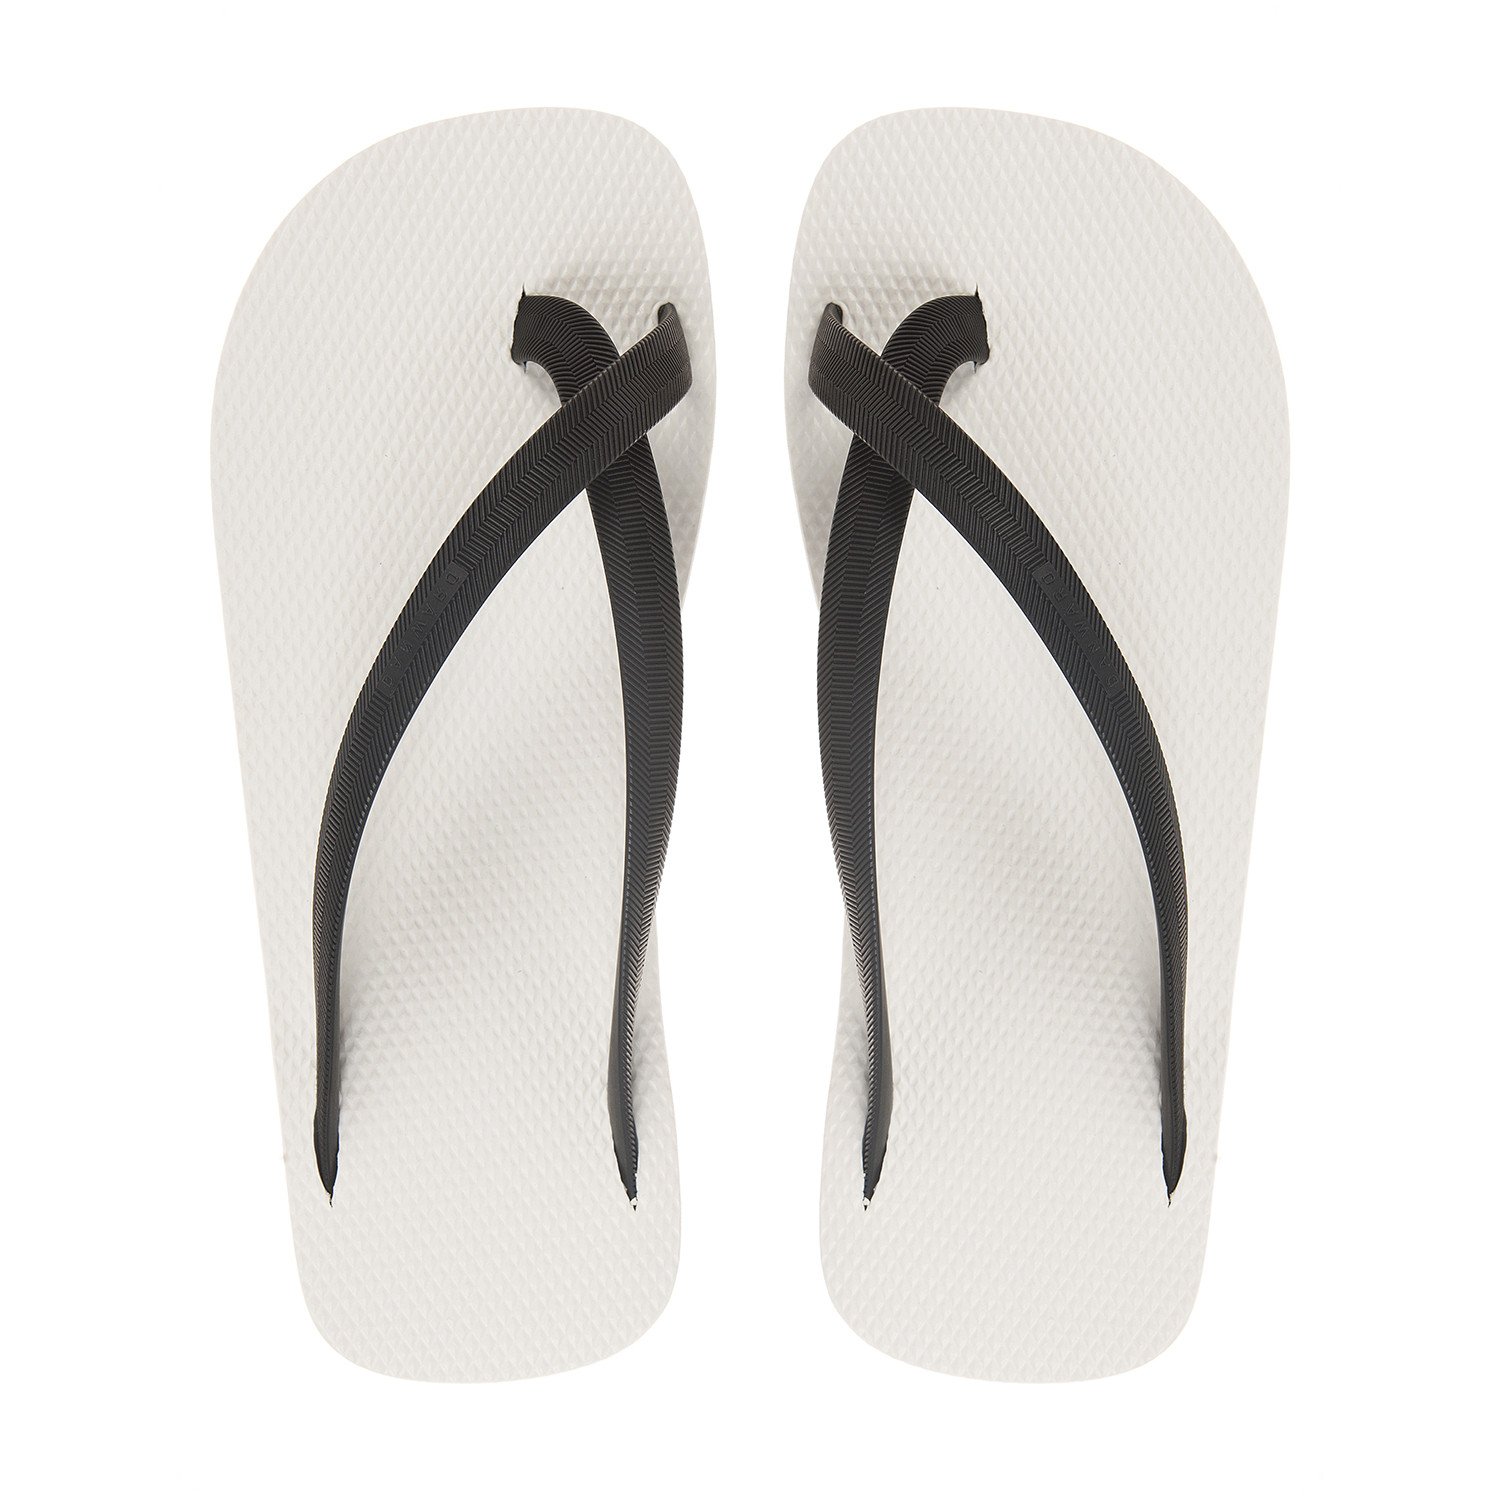 Danward Men's Cross Toe Flip-Flop Sandals S14FWFF1 $78 NEW | eBay